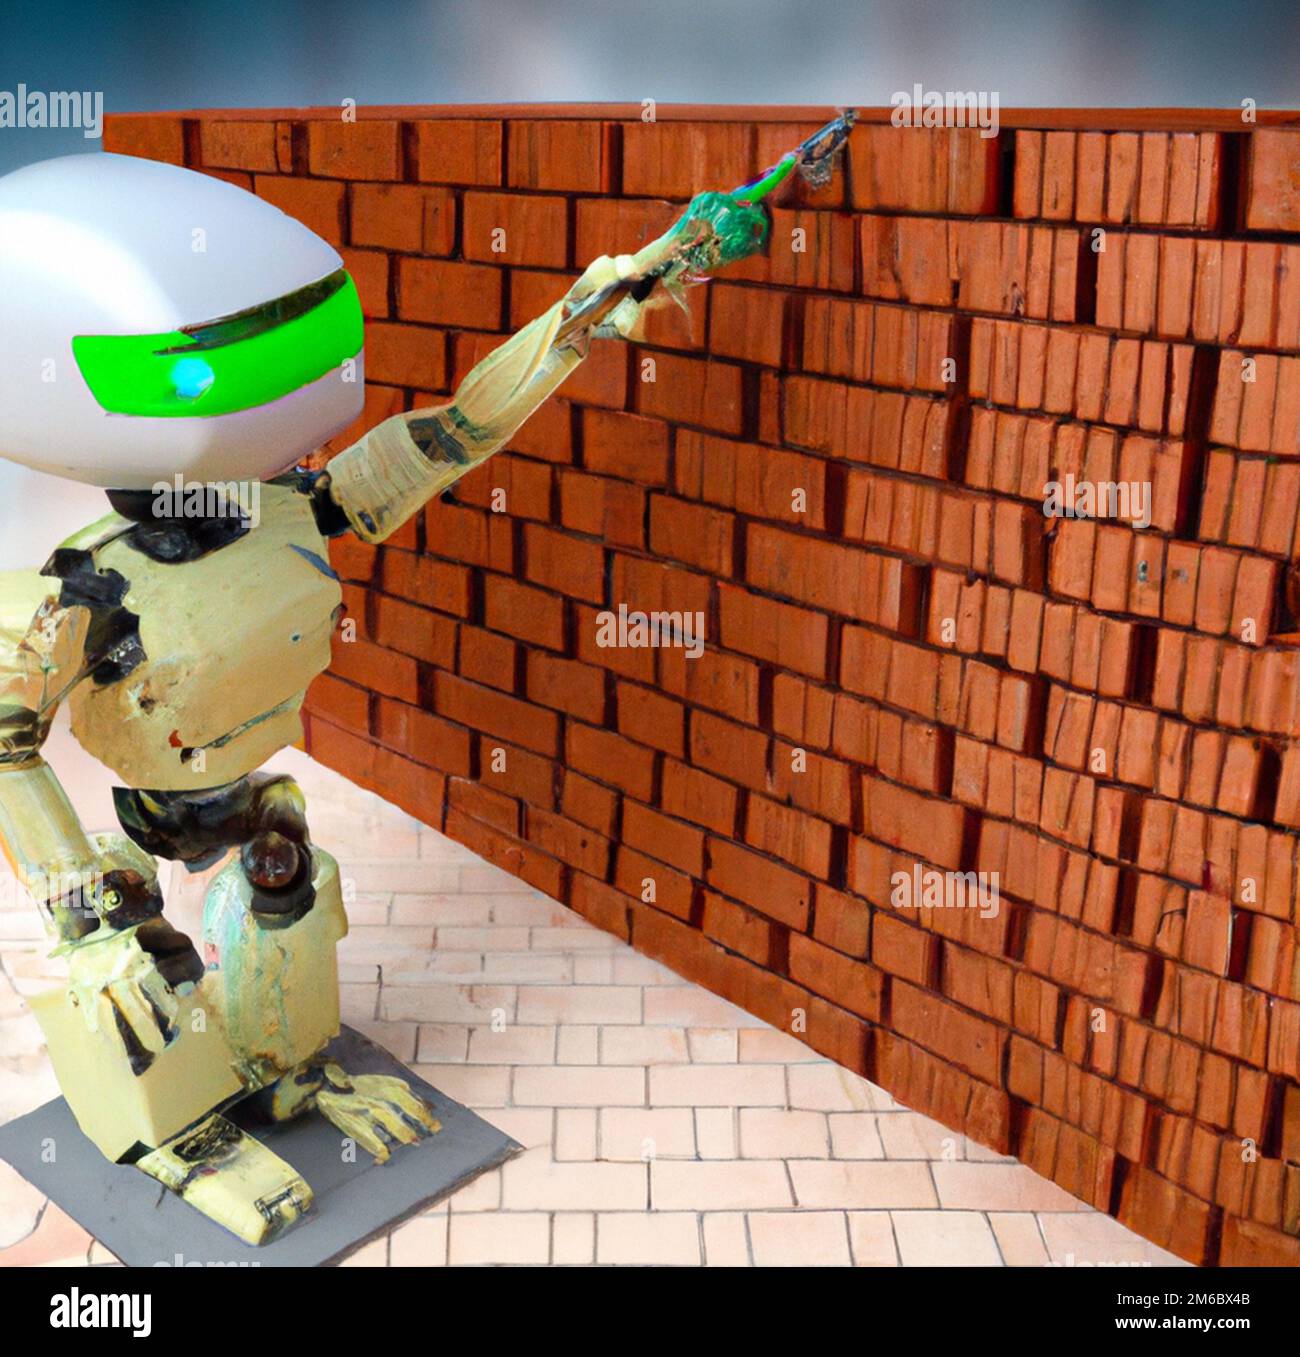 robot worker laying bricks Stock Photo